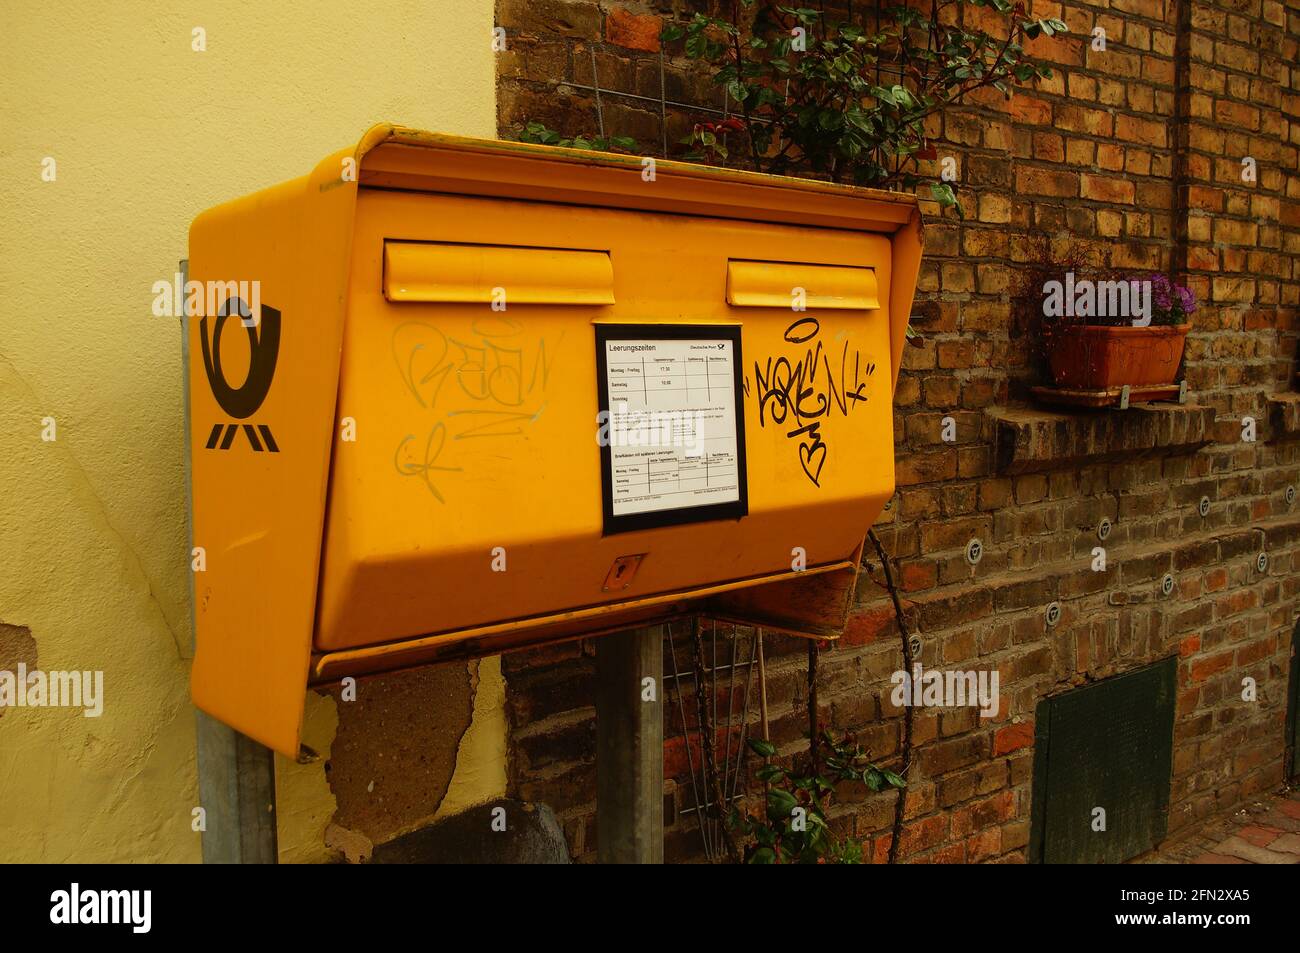 FRANKFURT, GERMANY - Apr 30, 2021: A public letterbox of Deutsche Post AG in Frankfurt Niederursel. Stock Photo